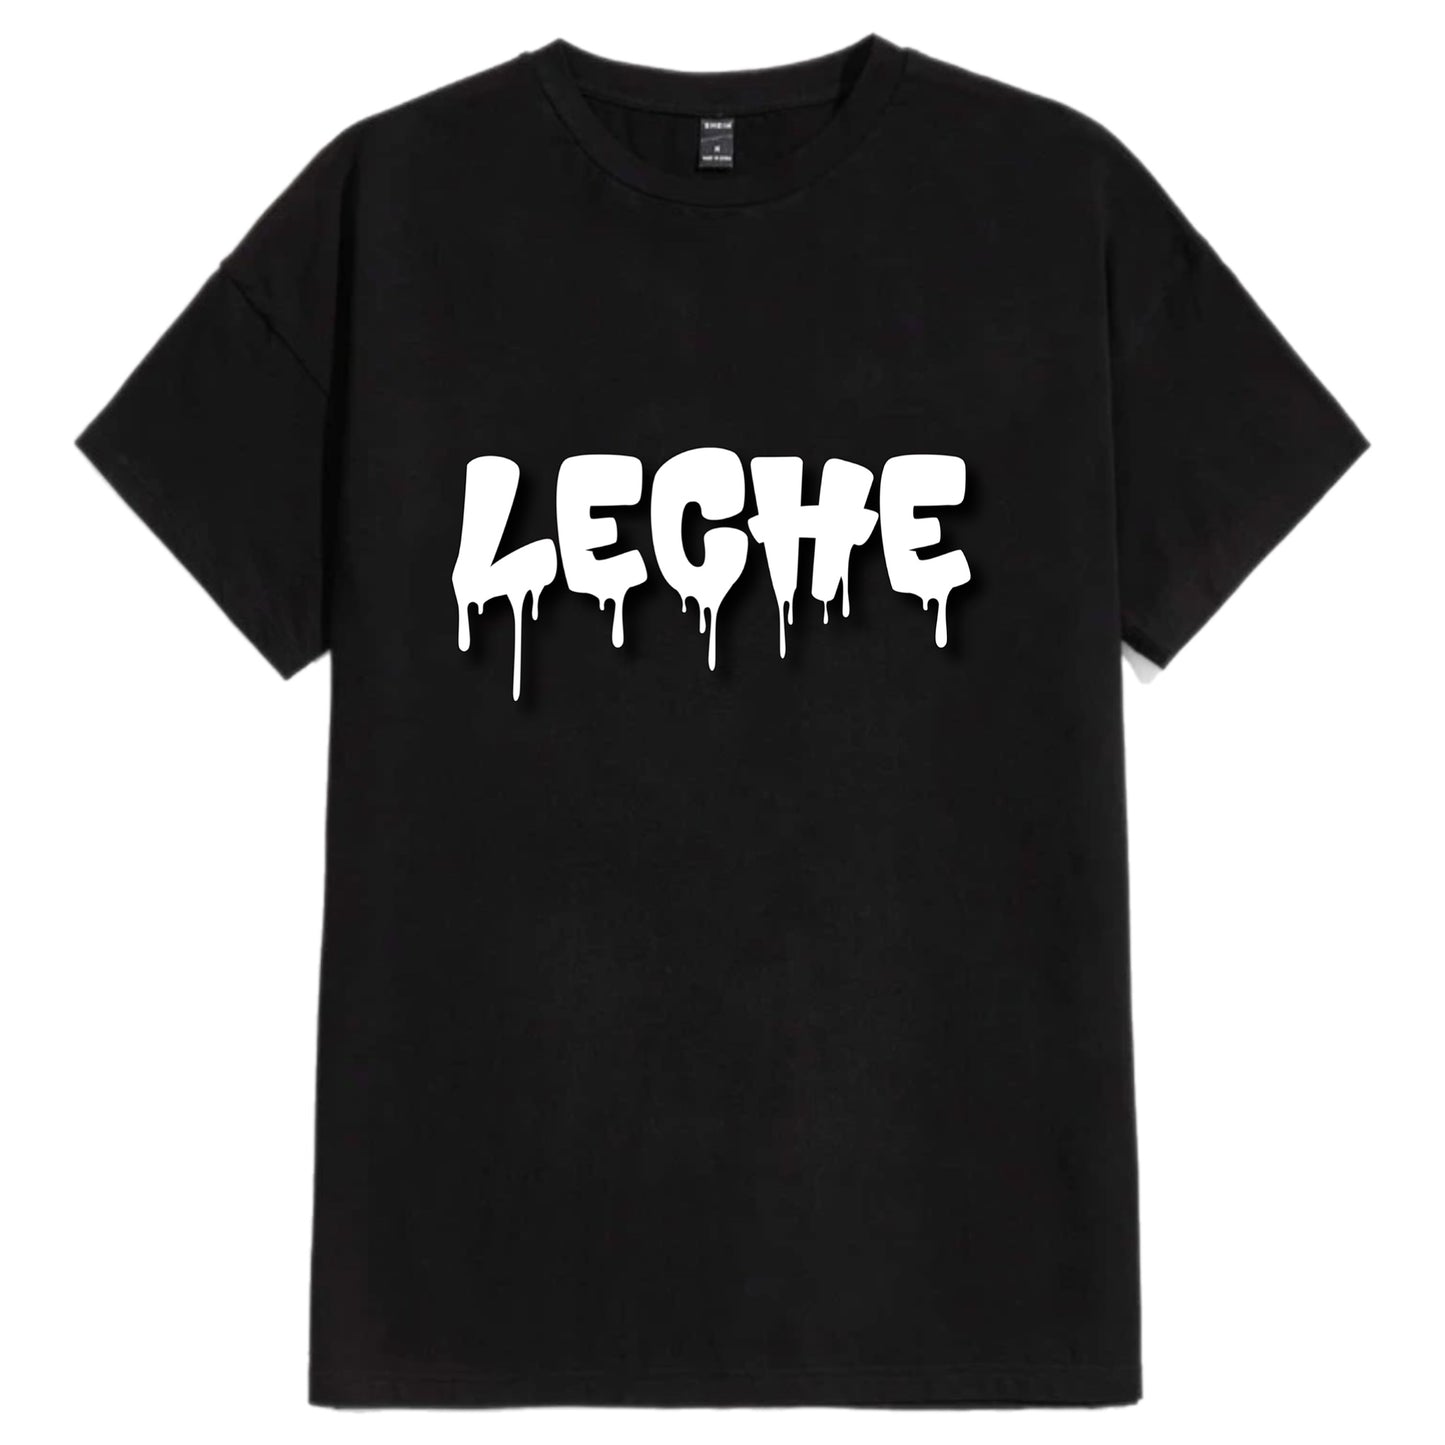 Men's/Women's Classic Fit "Leche" T-Shirt